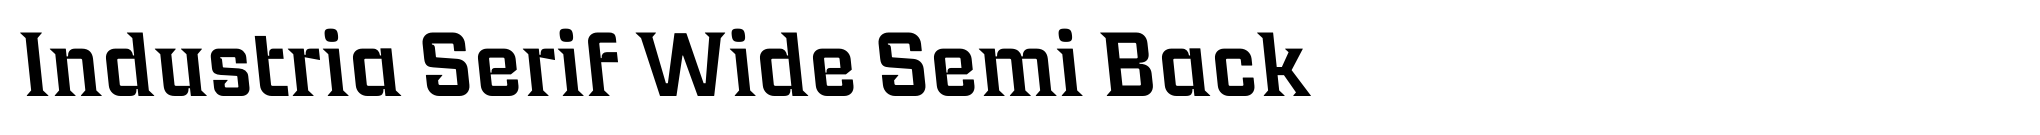 Industria Serif Wide Semi Back image